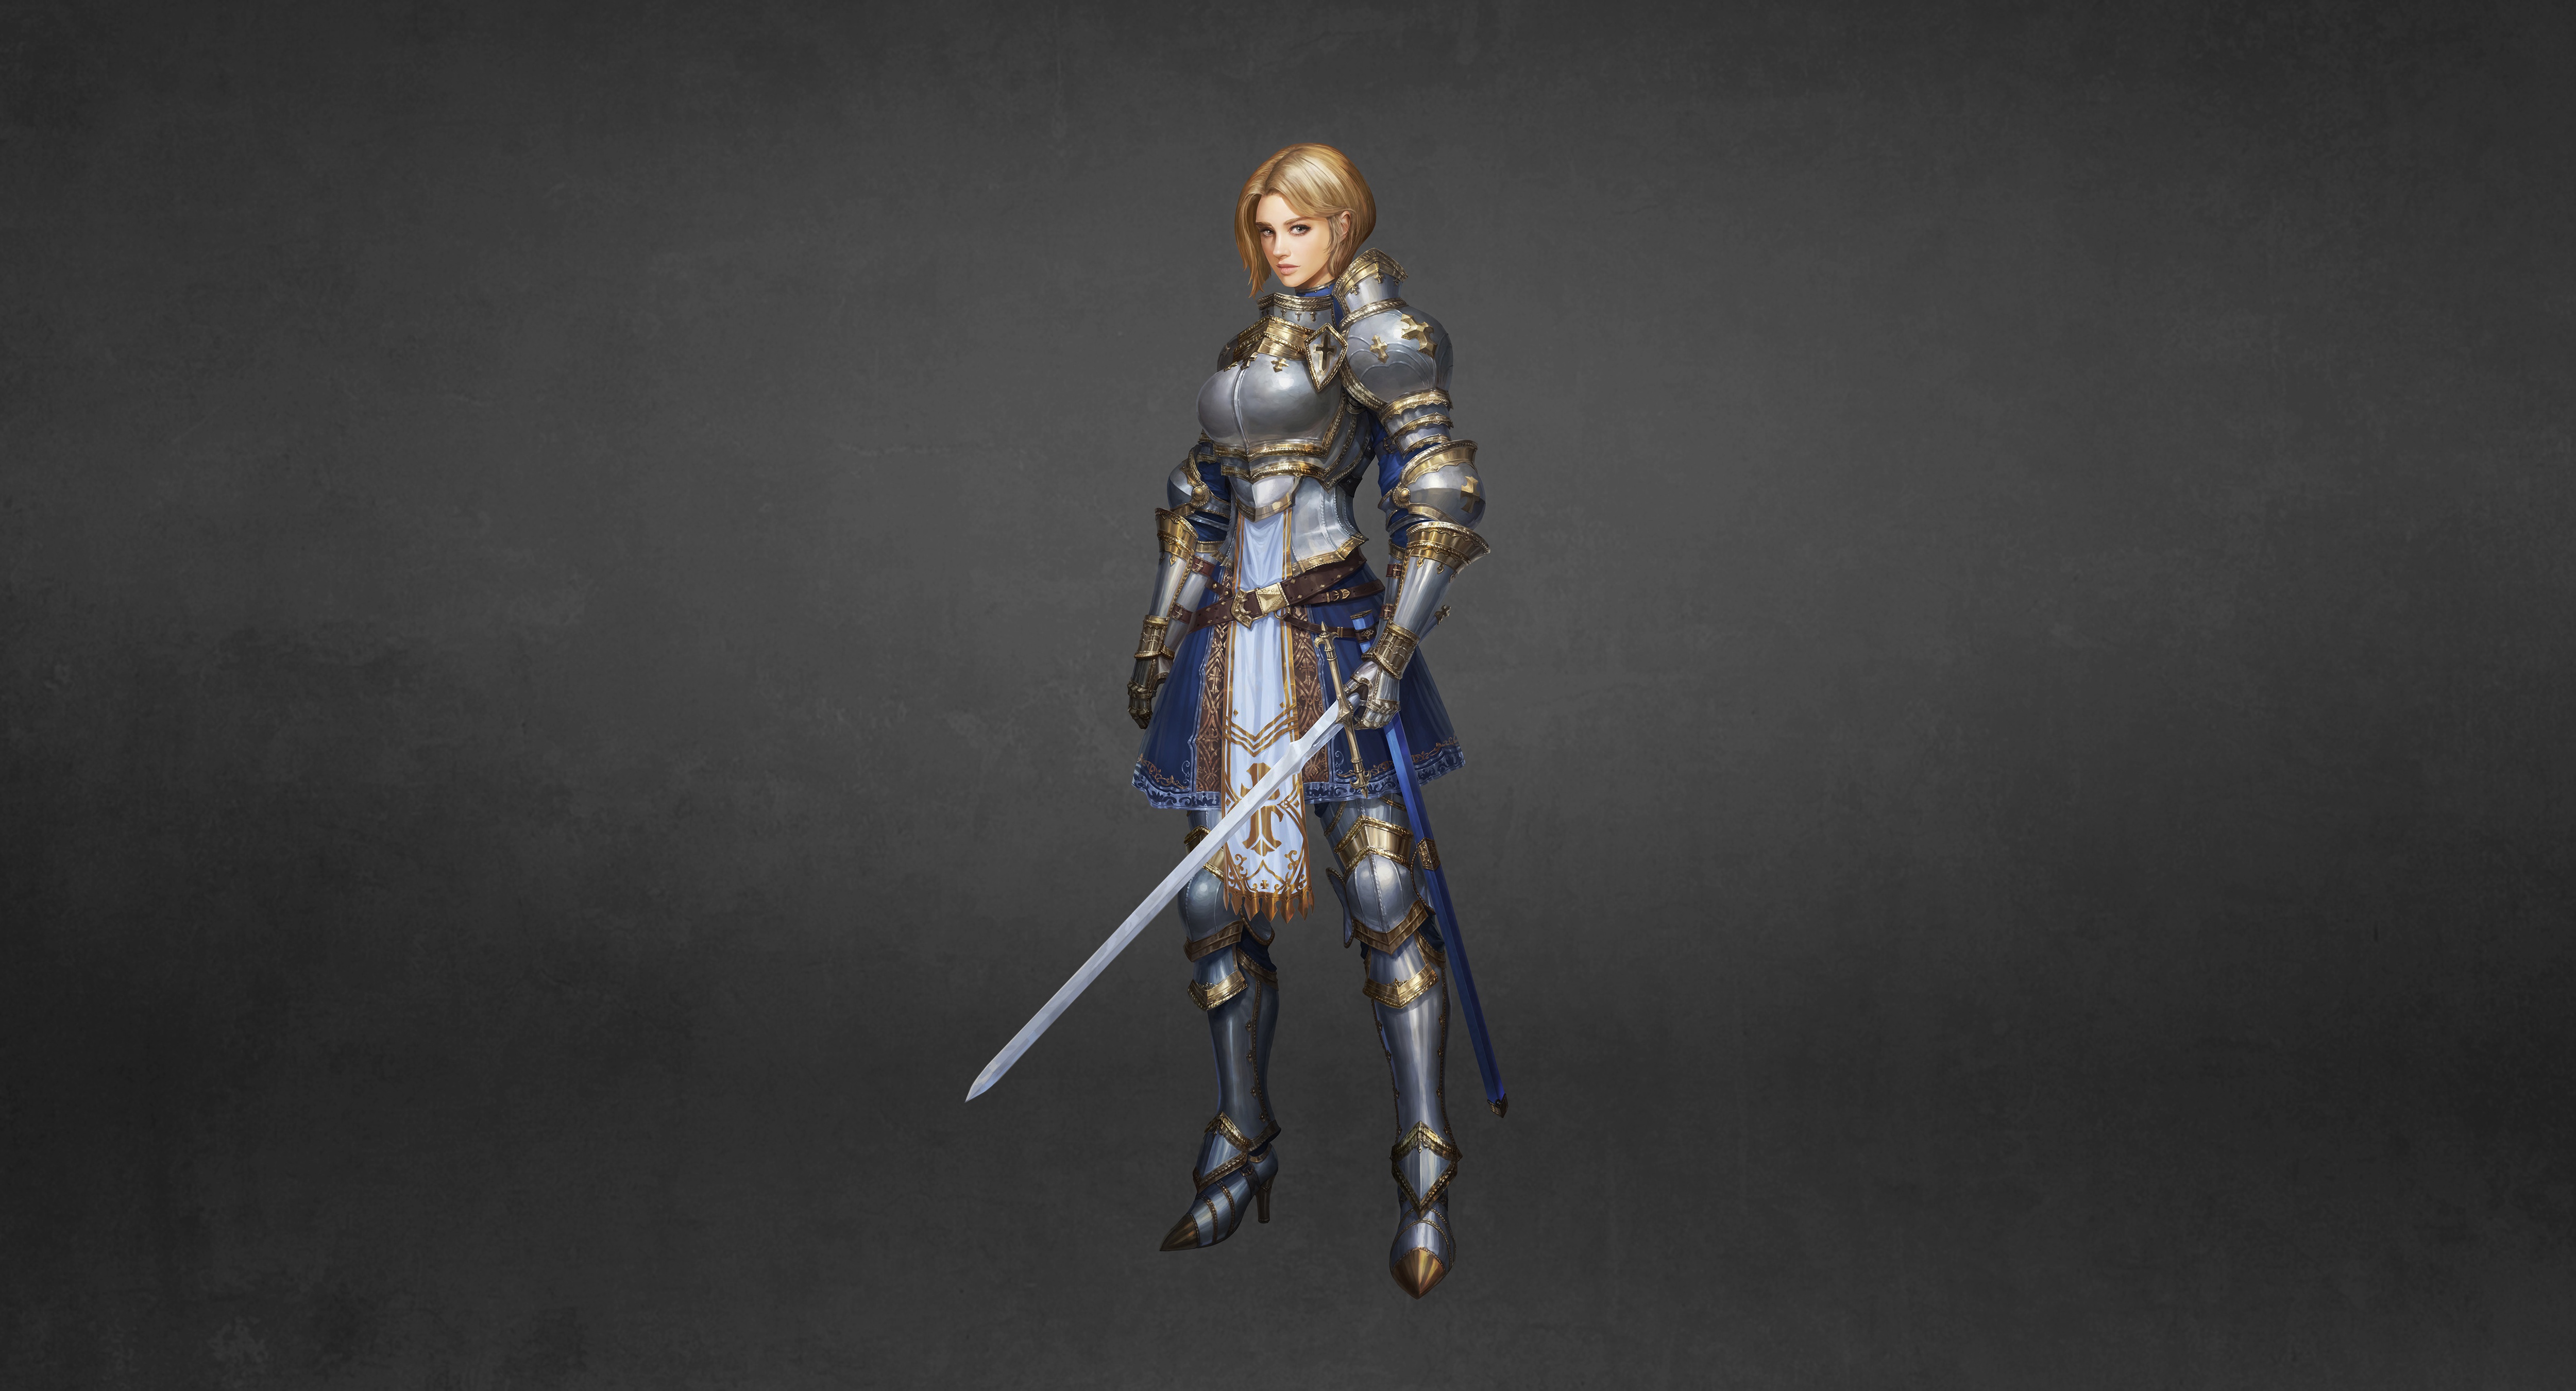 Armor Blonde Short Hair Sword Woman Warrior 5000x2700